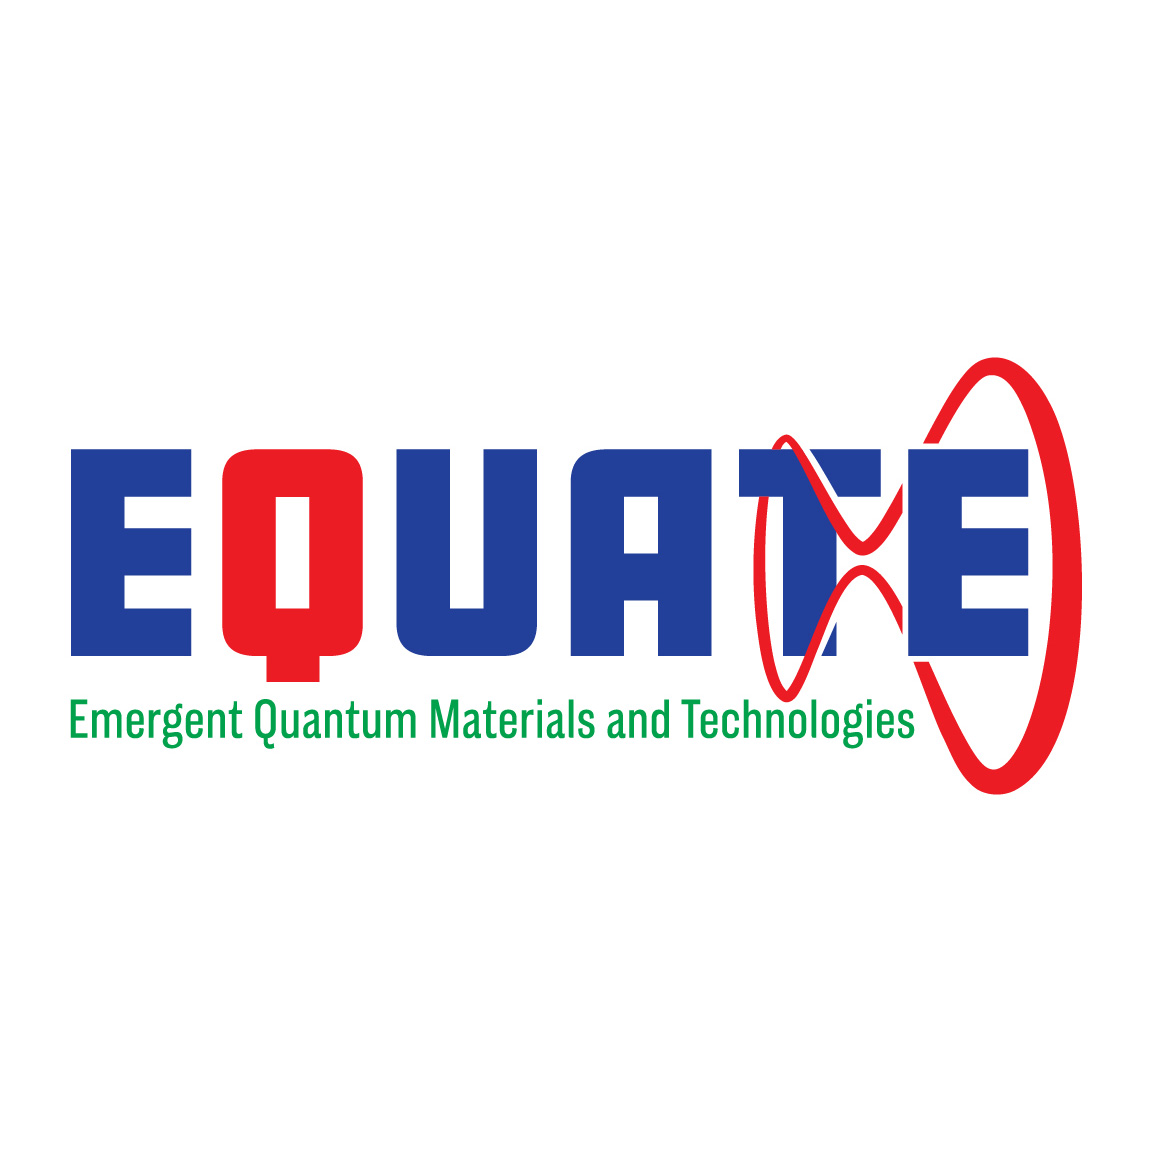 Emergent Quantum Materials and Technologies logo